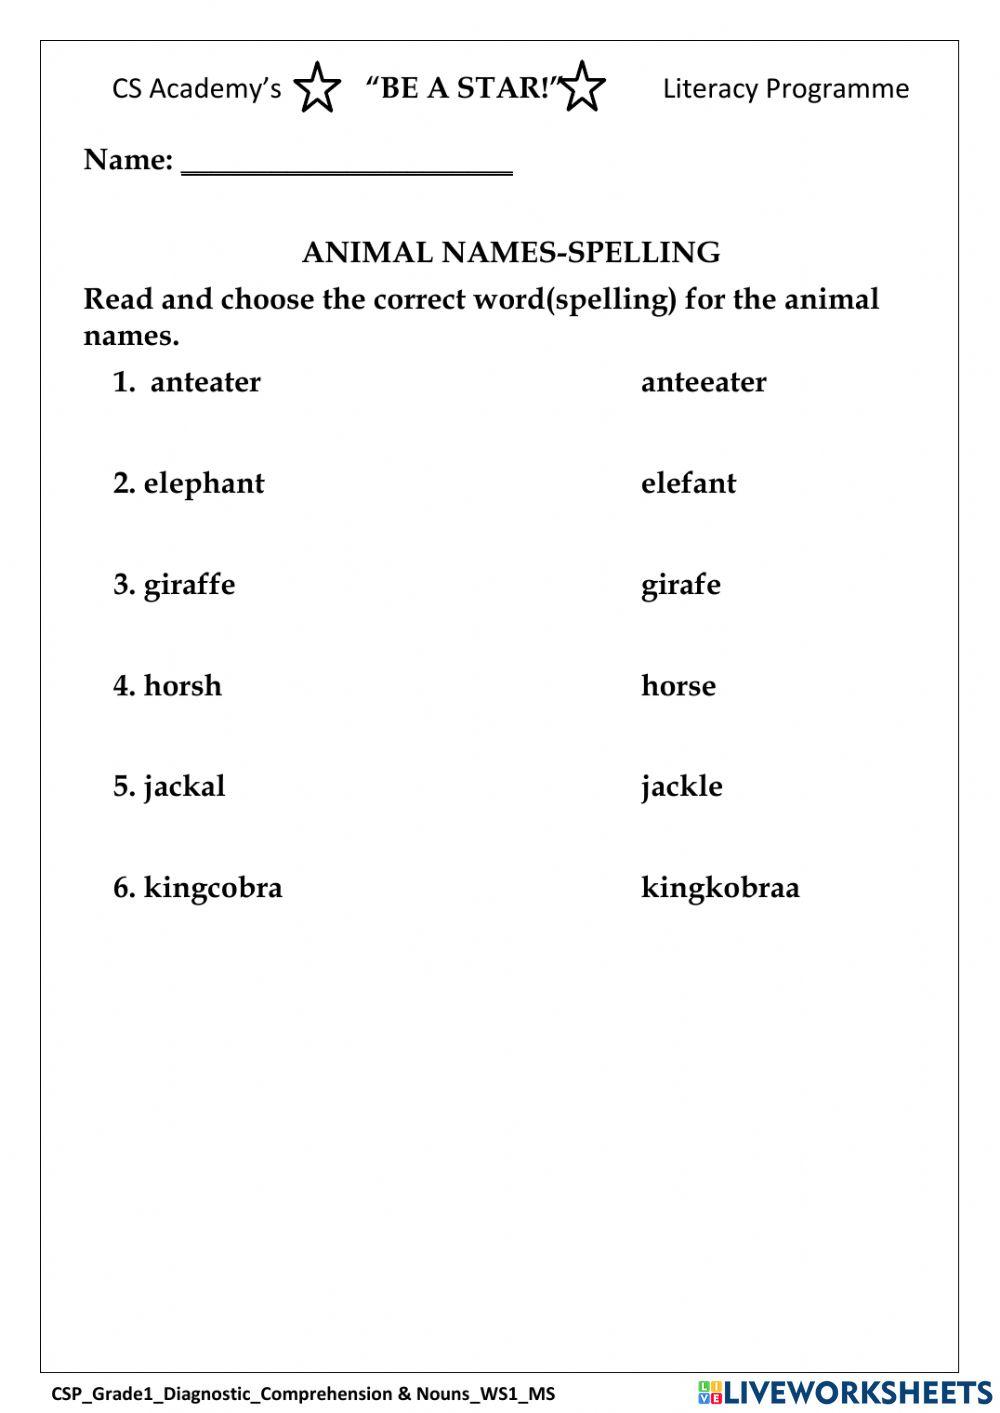 Animal names- Spelling 1